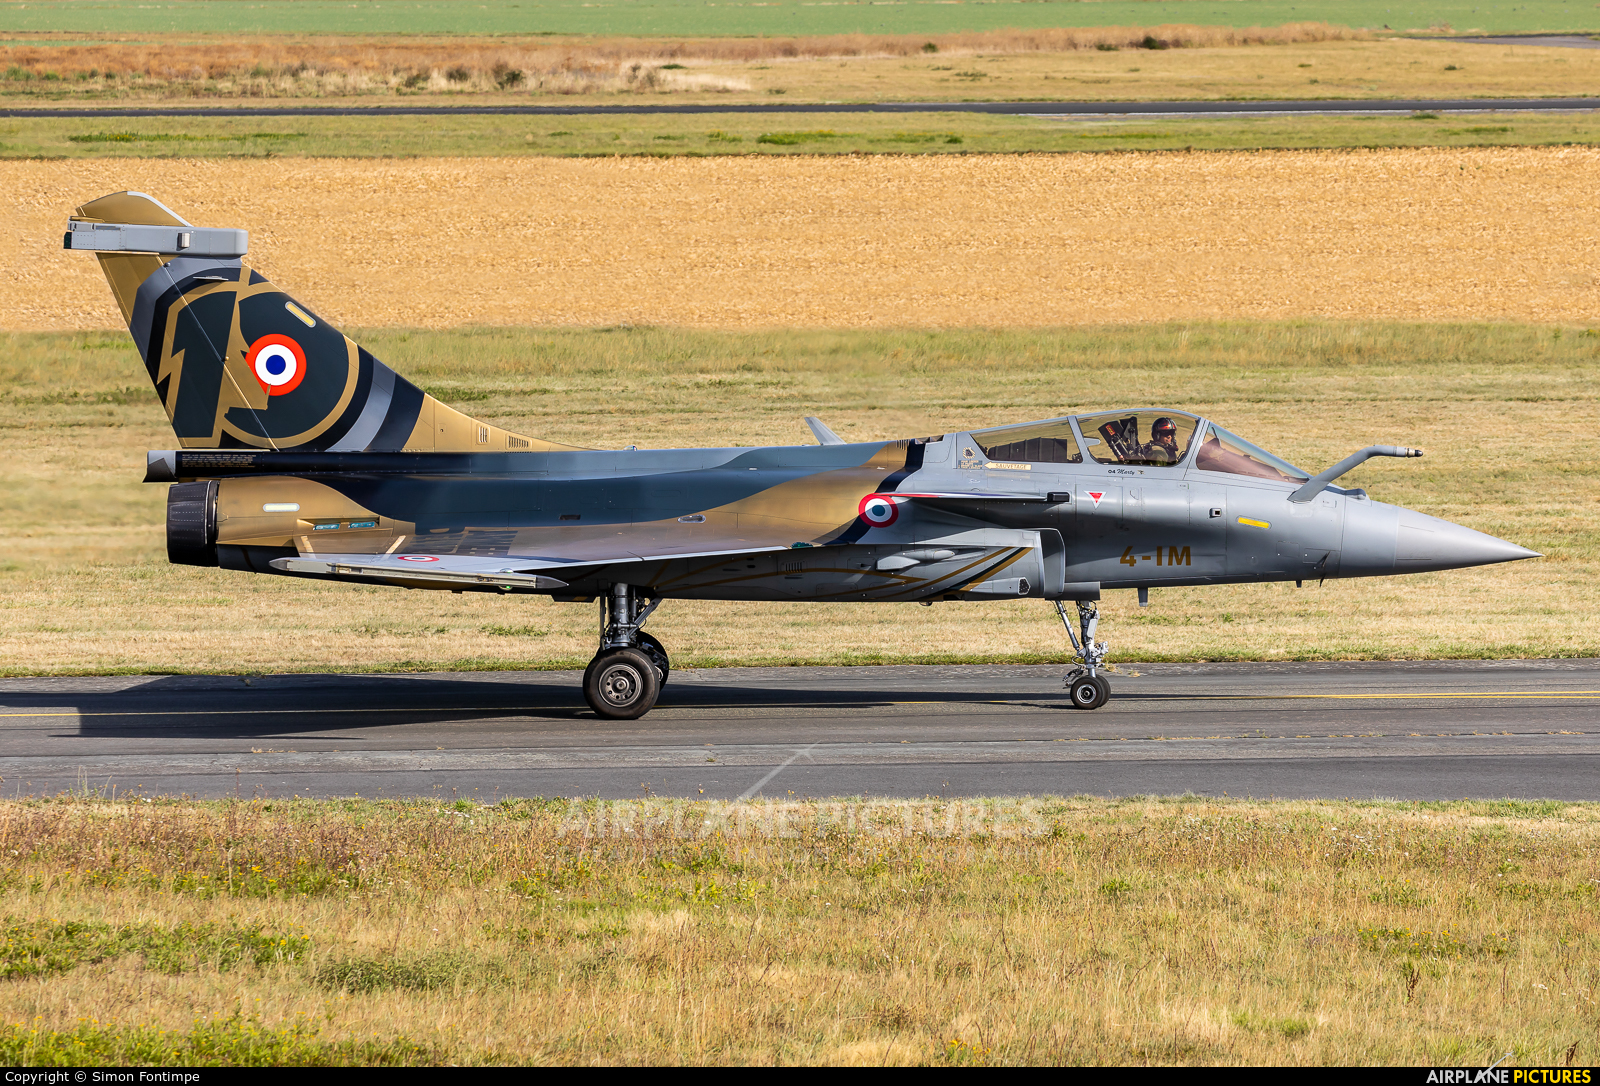 France - Air Force 4-IM aircraft at Melun-Villaroche